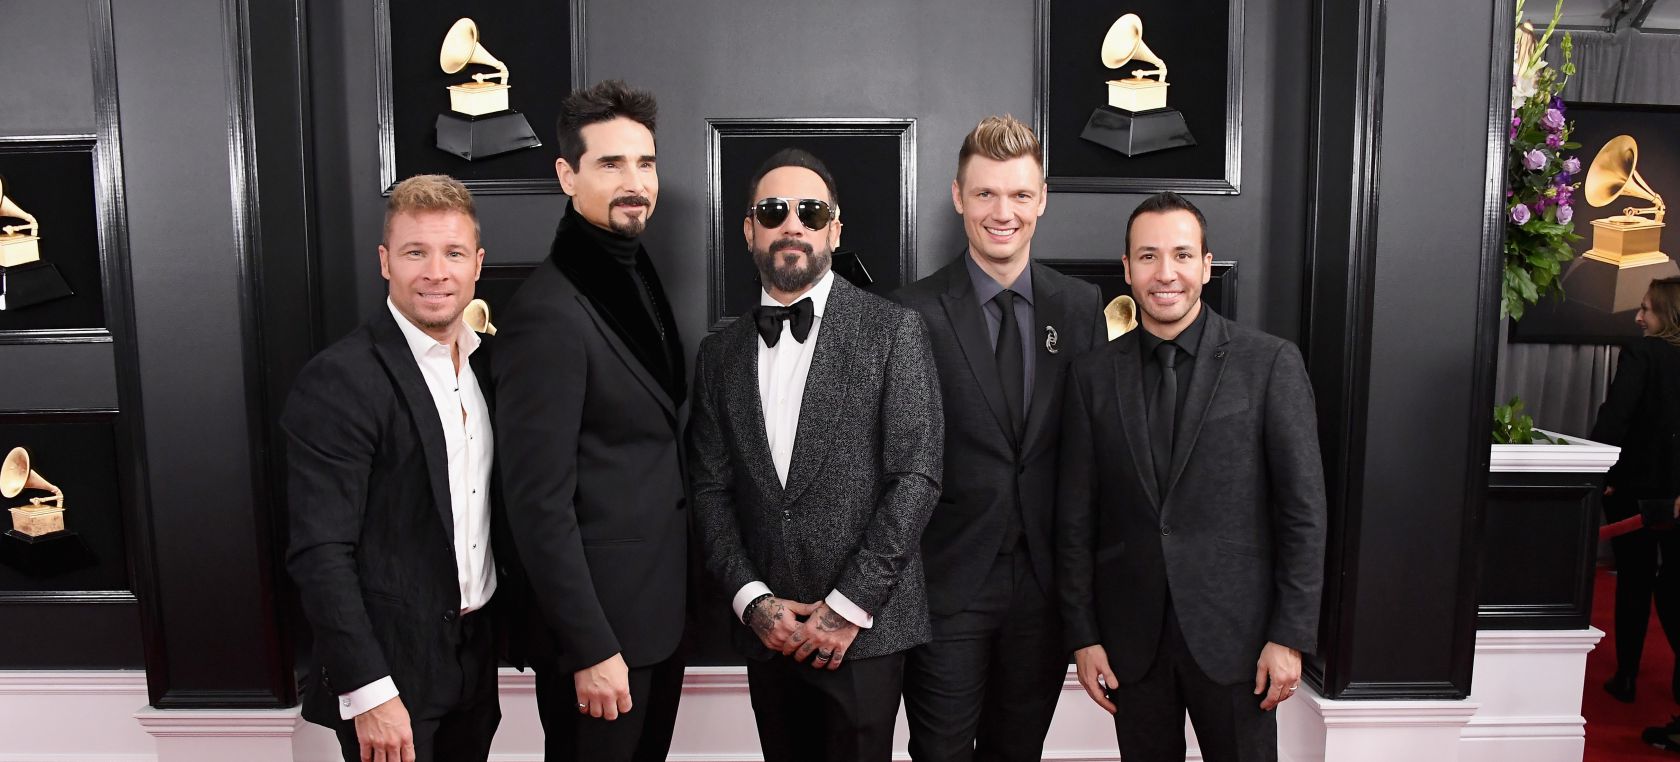 Backstreet Boys publican 'A Very Backstreet Christmas', primer álbum navideño de su carrera